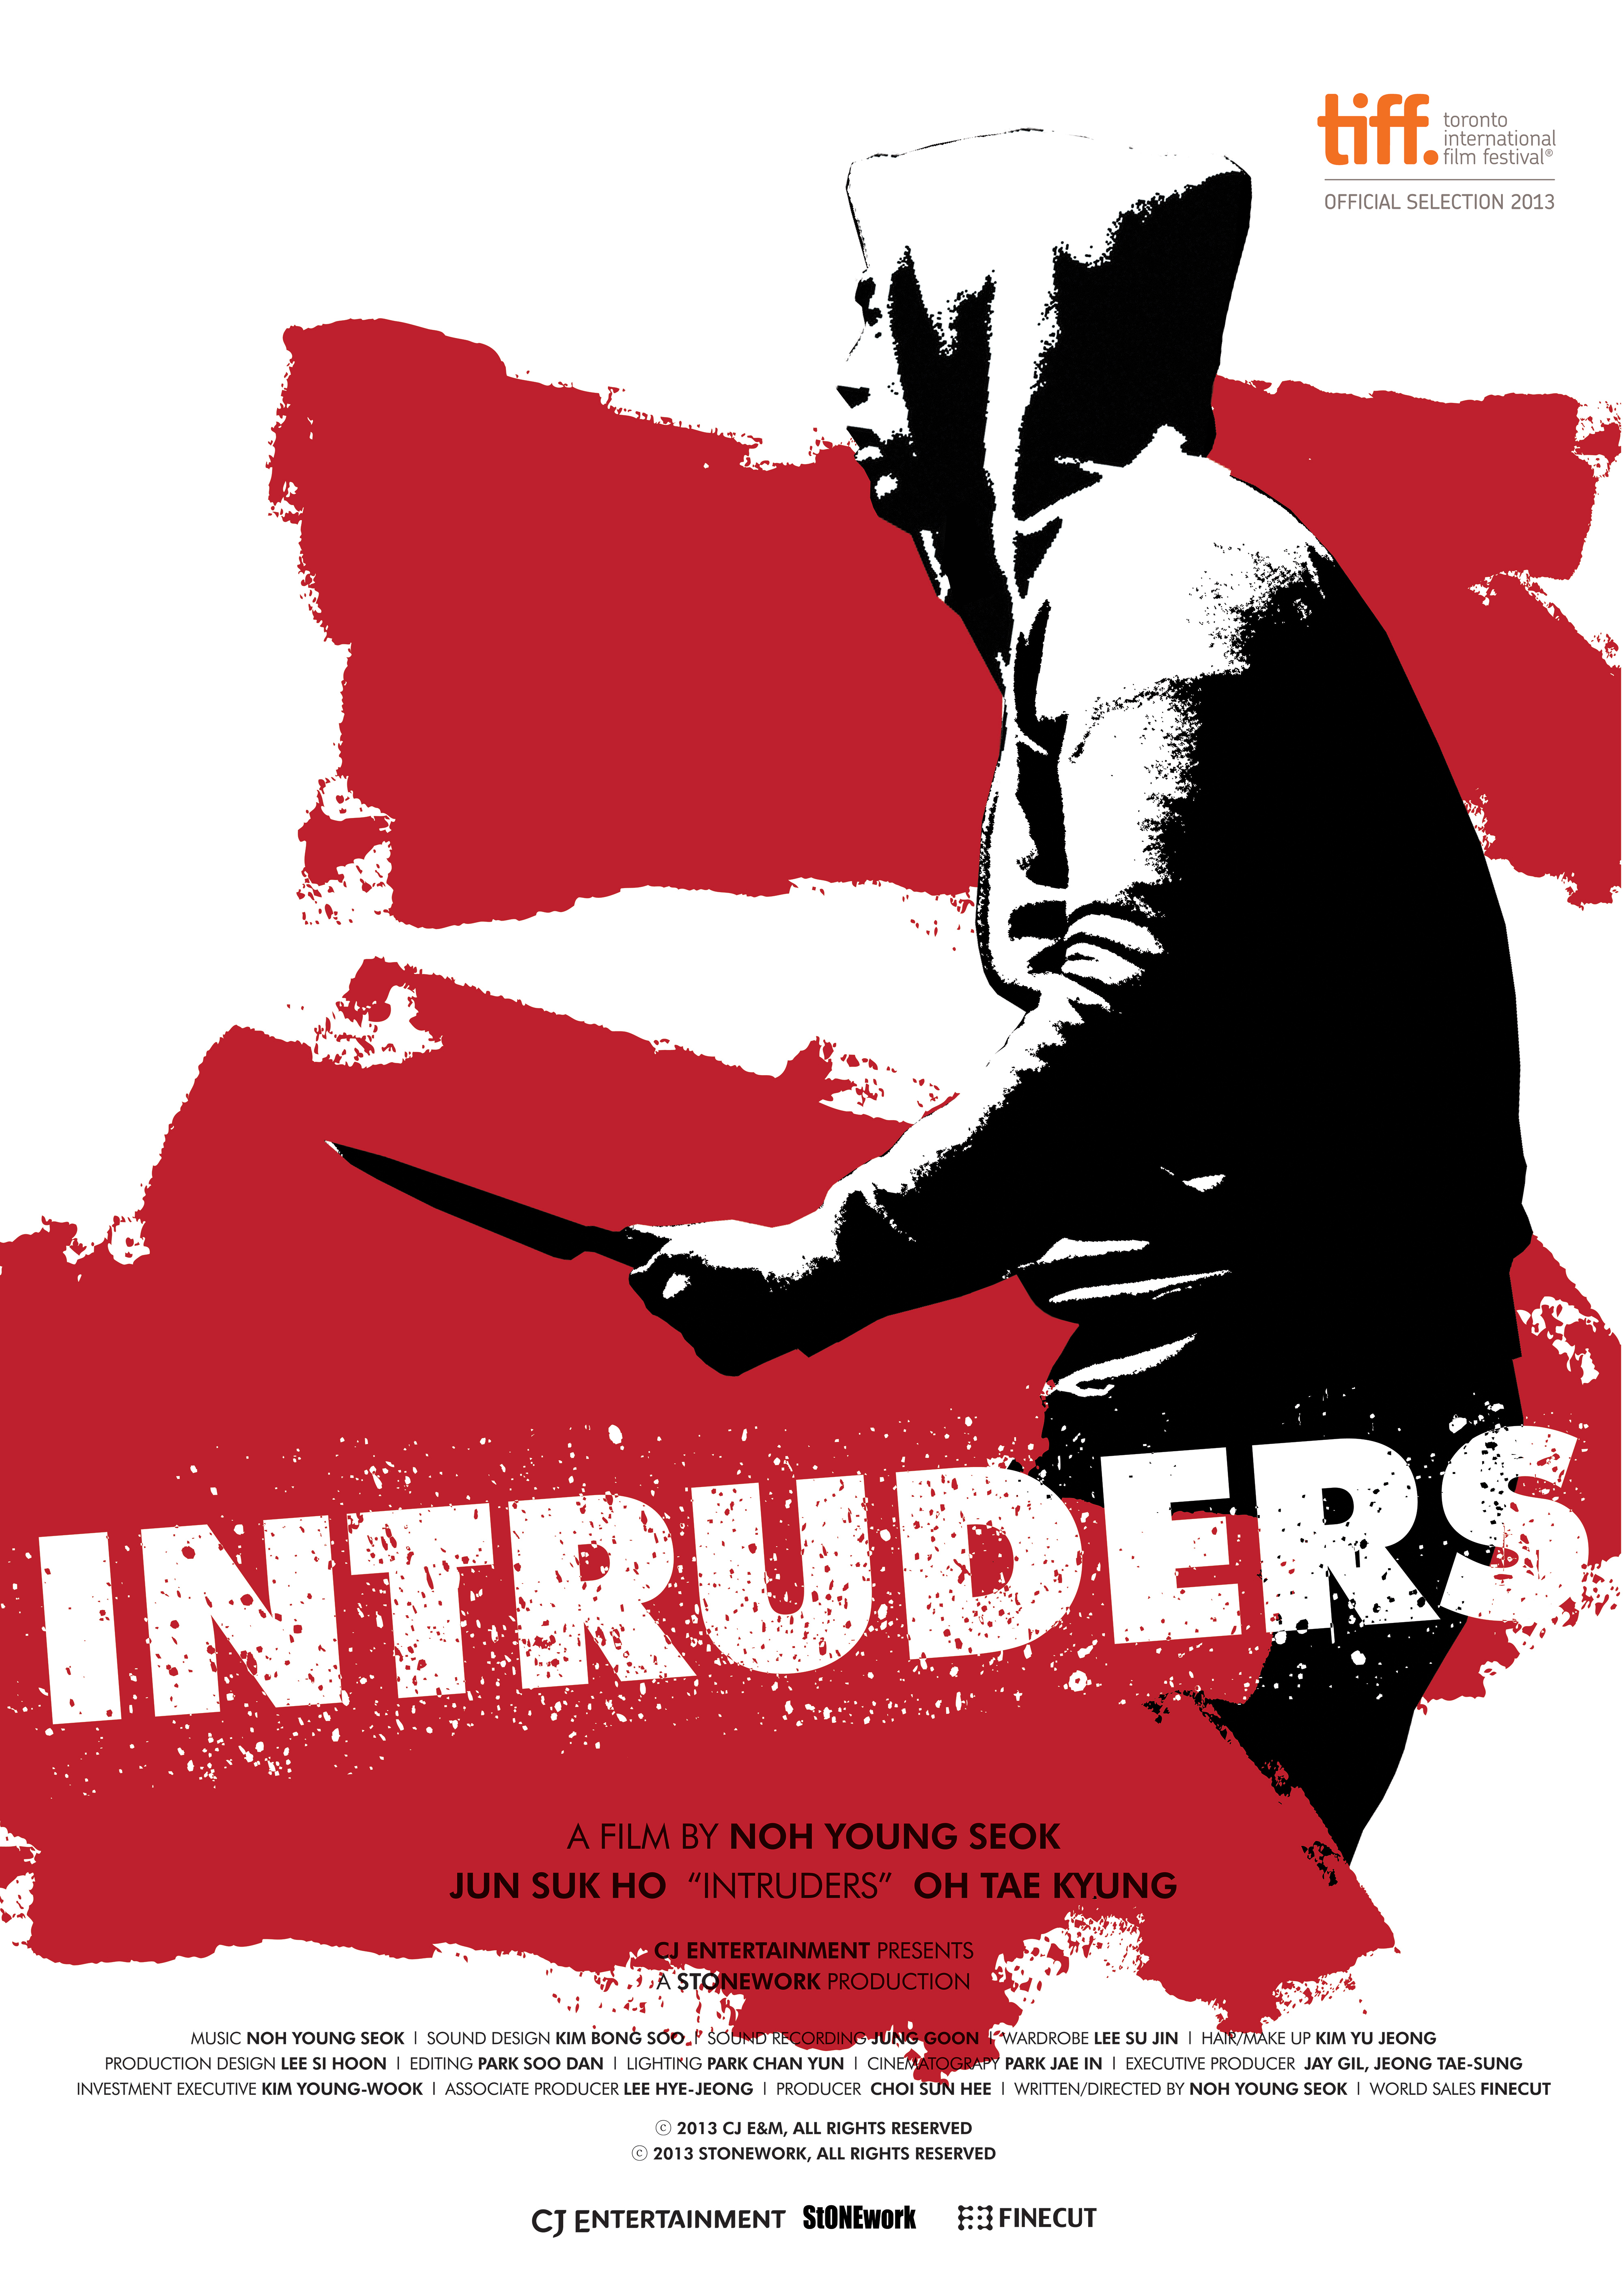 Intruders The Film